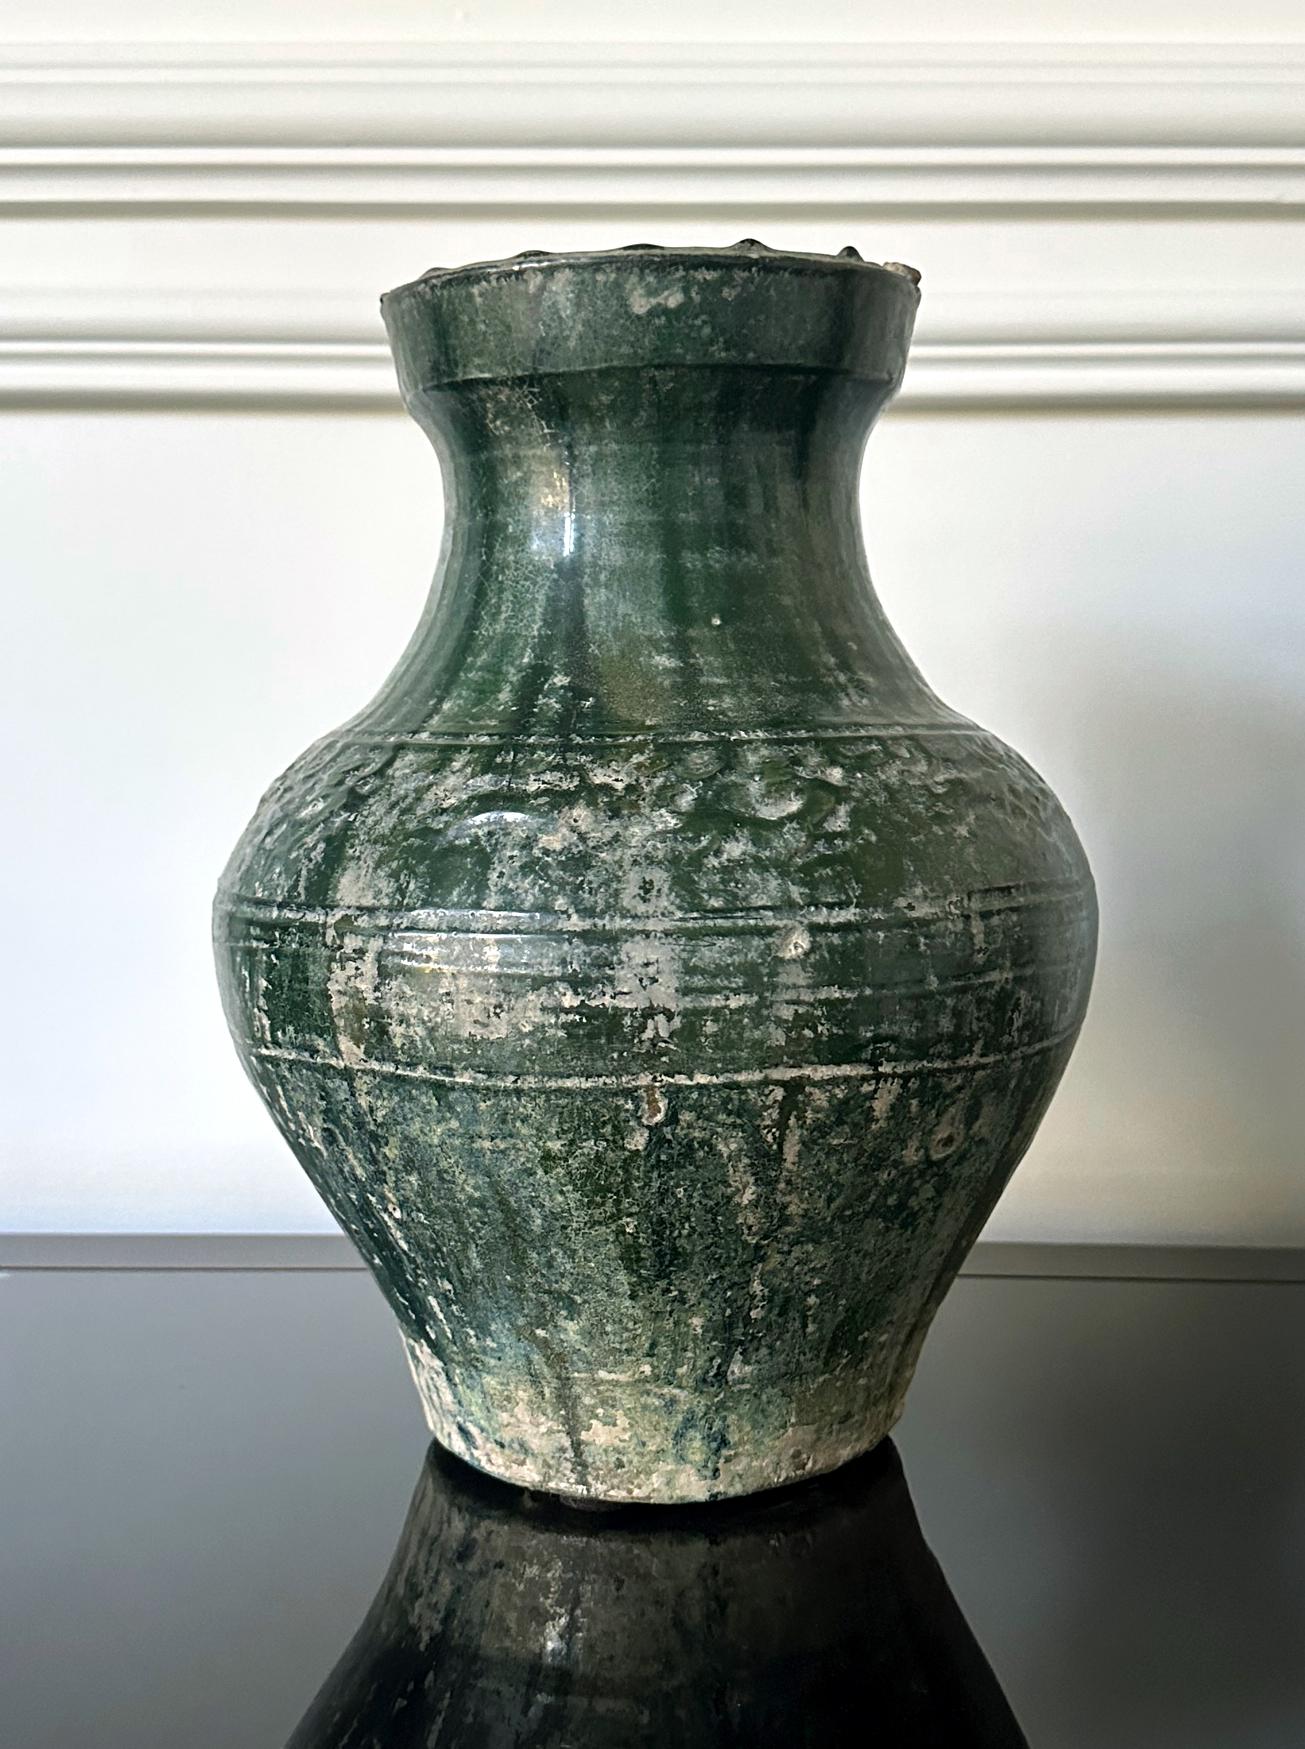 A large ceramic storage jar in 